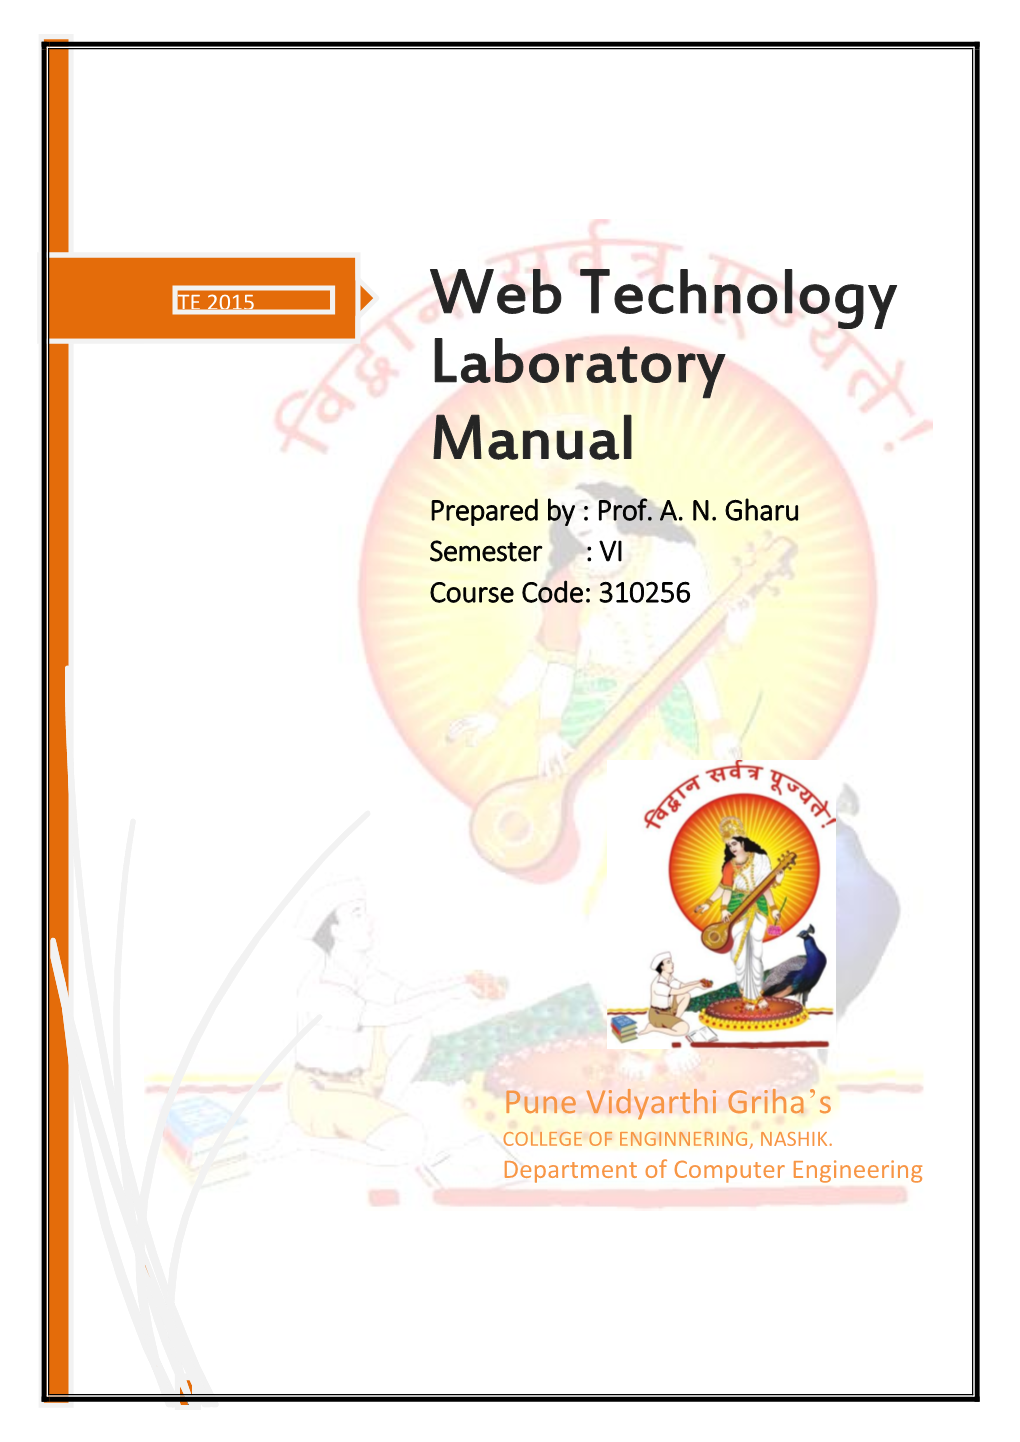 Web Technology Laboratory Manual Prepared by : Prof